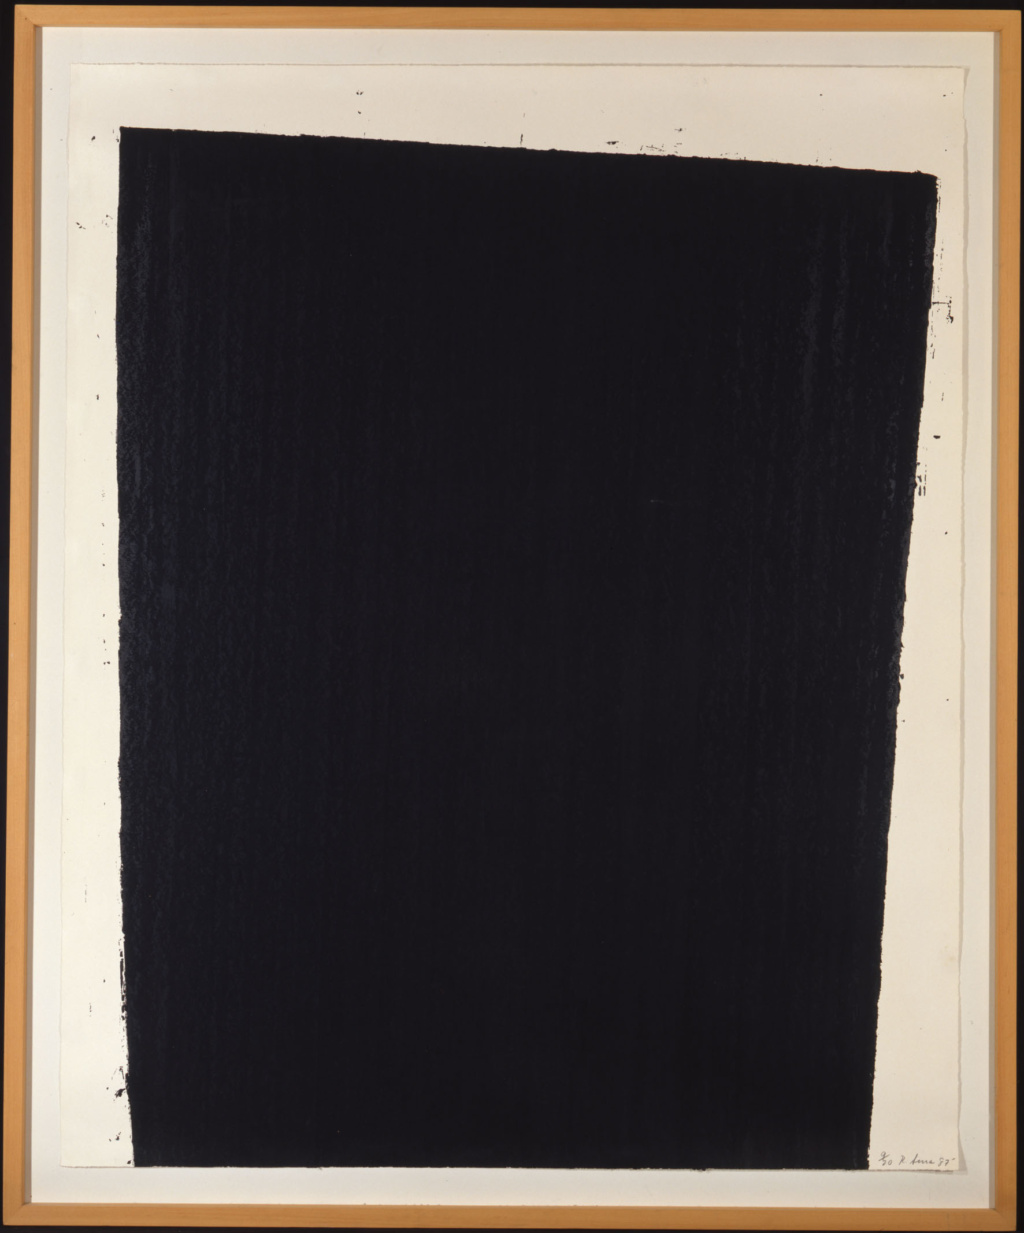 Richard Serra, Muddy Waters, 1987
Screenprint, paintstick, 187 x 152 cm, Edition No. 9/20, Catalogue Raisonné Nr. 40, 1987